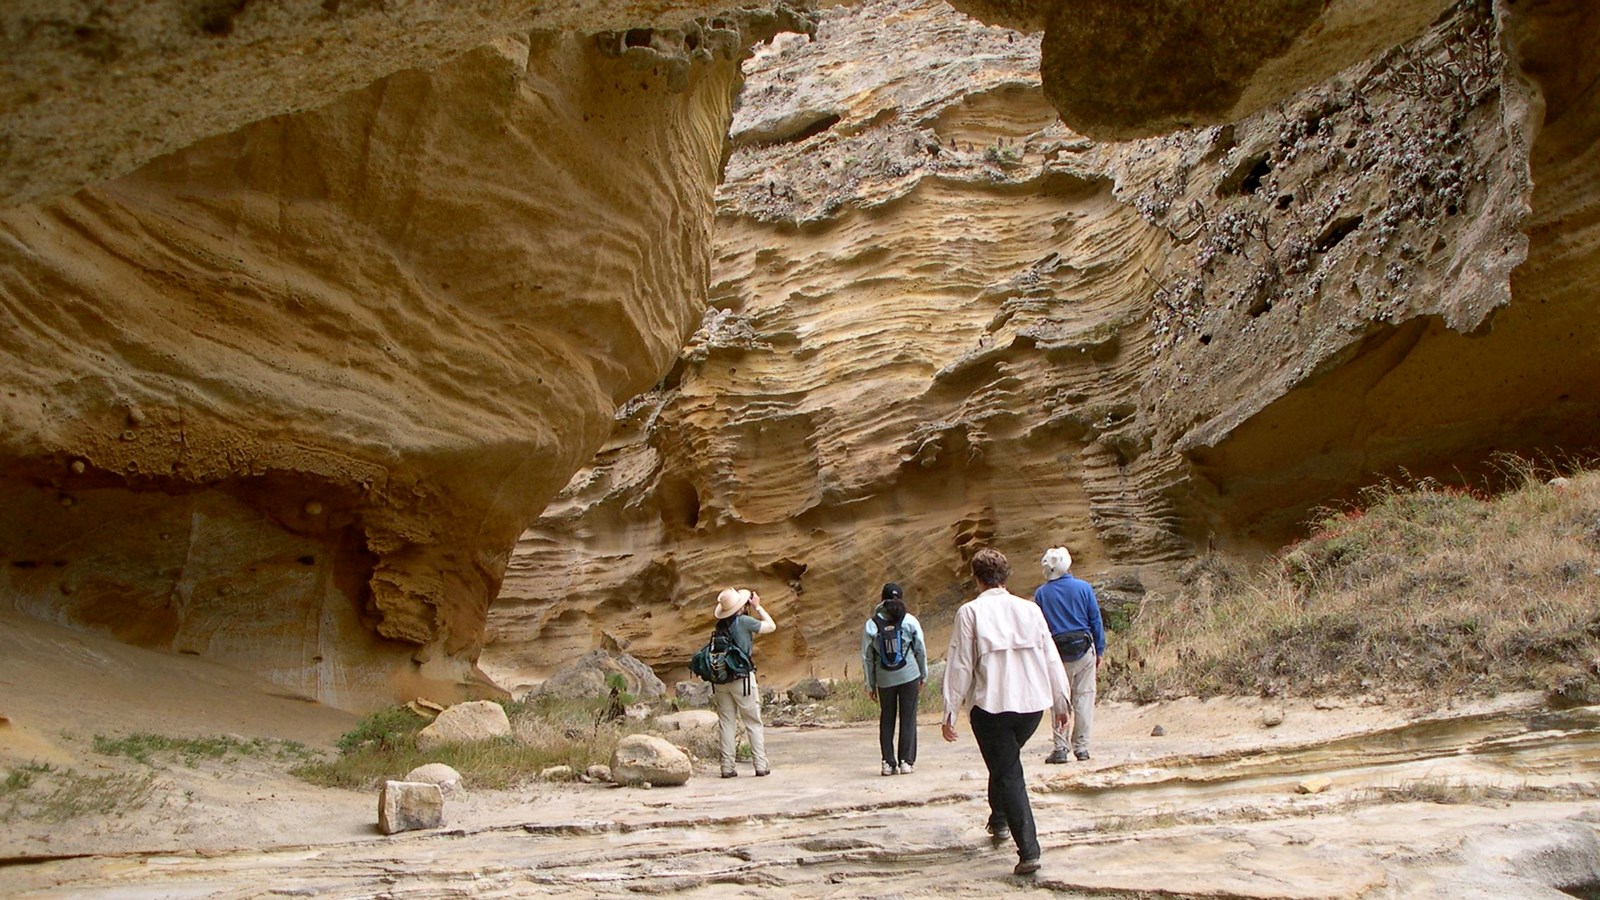 Visitor walking in narrow canyon with steep walls. 